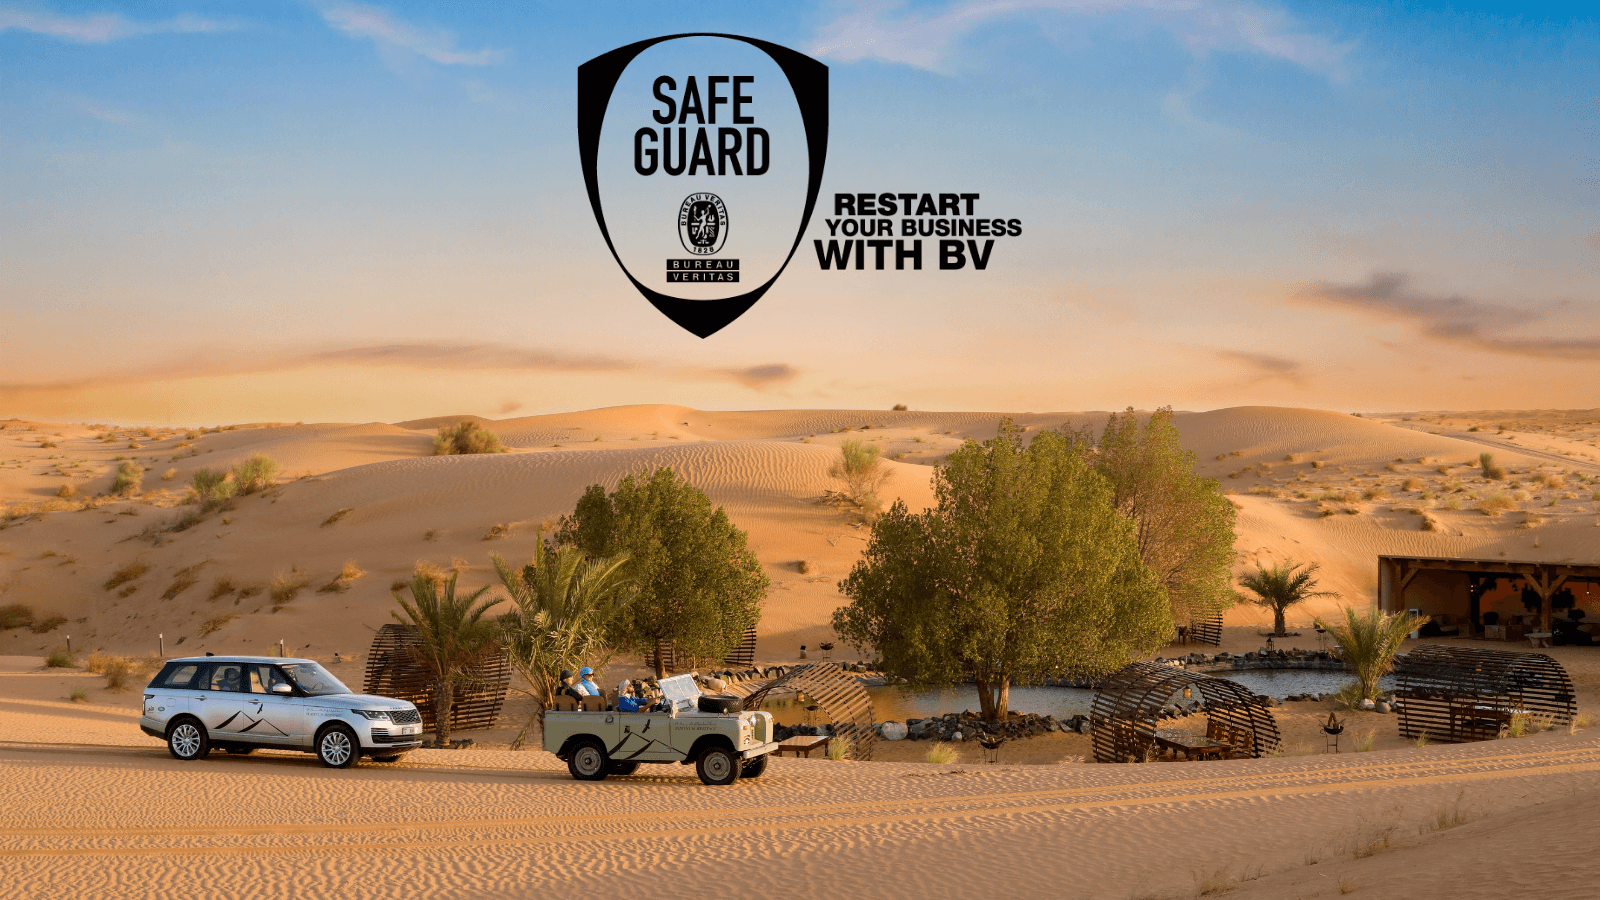 First Desert Safari Company in the World Certified with Bureau Veritas’ Safety Label: Platinum Heritage Dubai